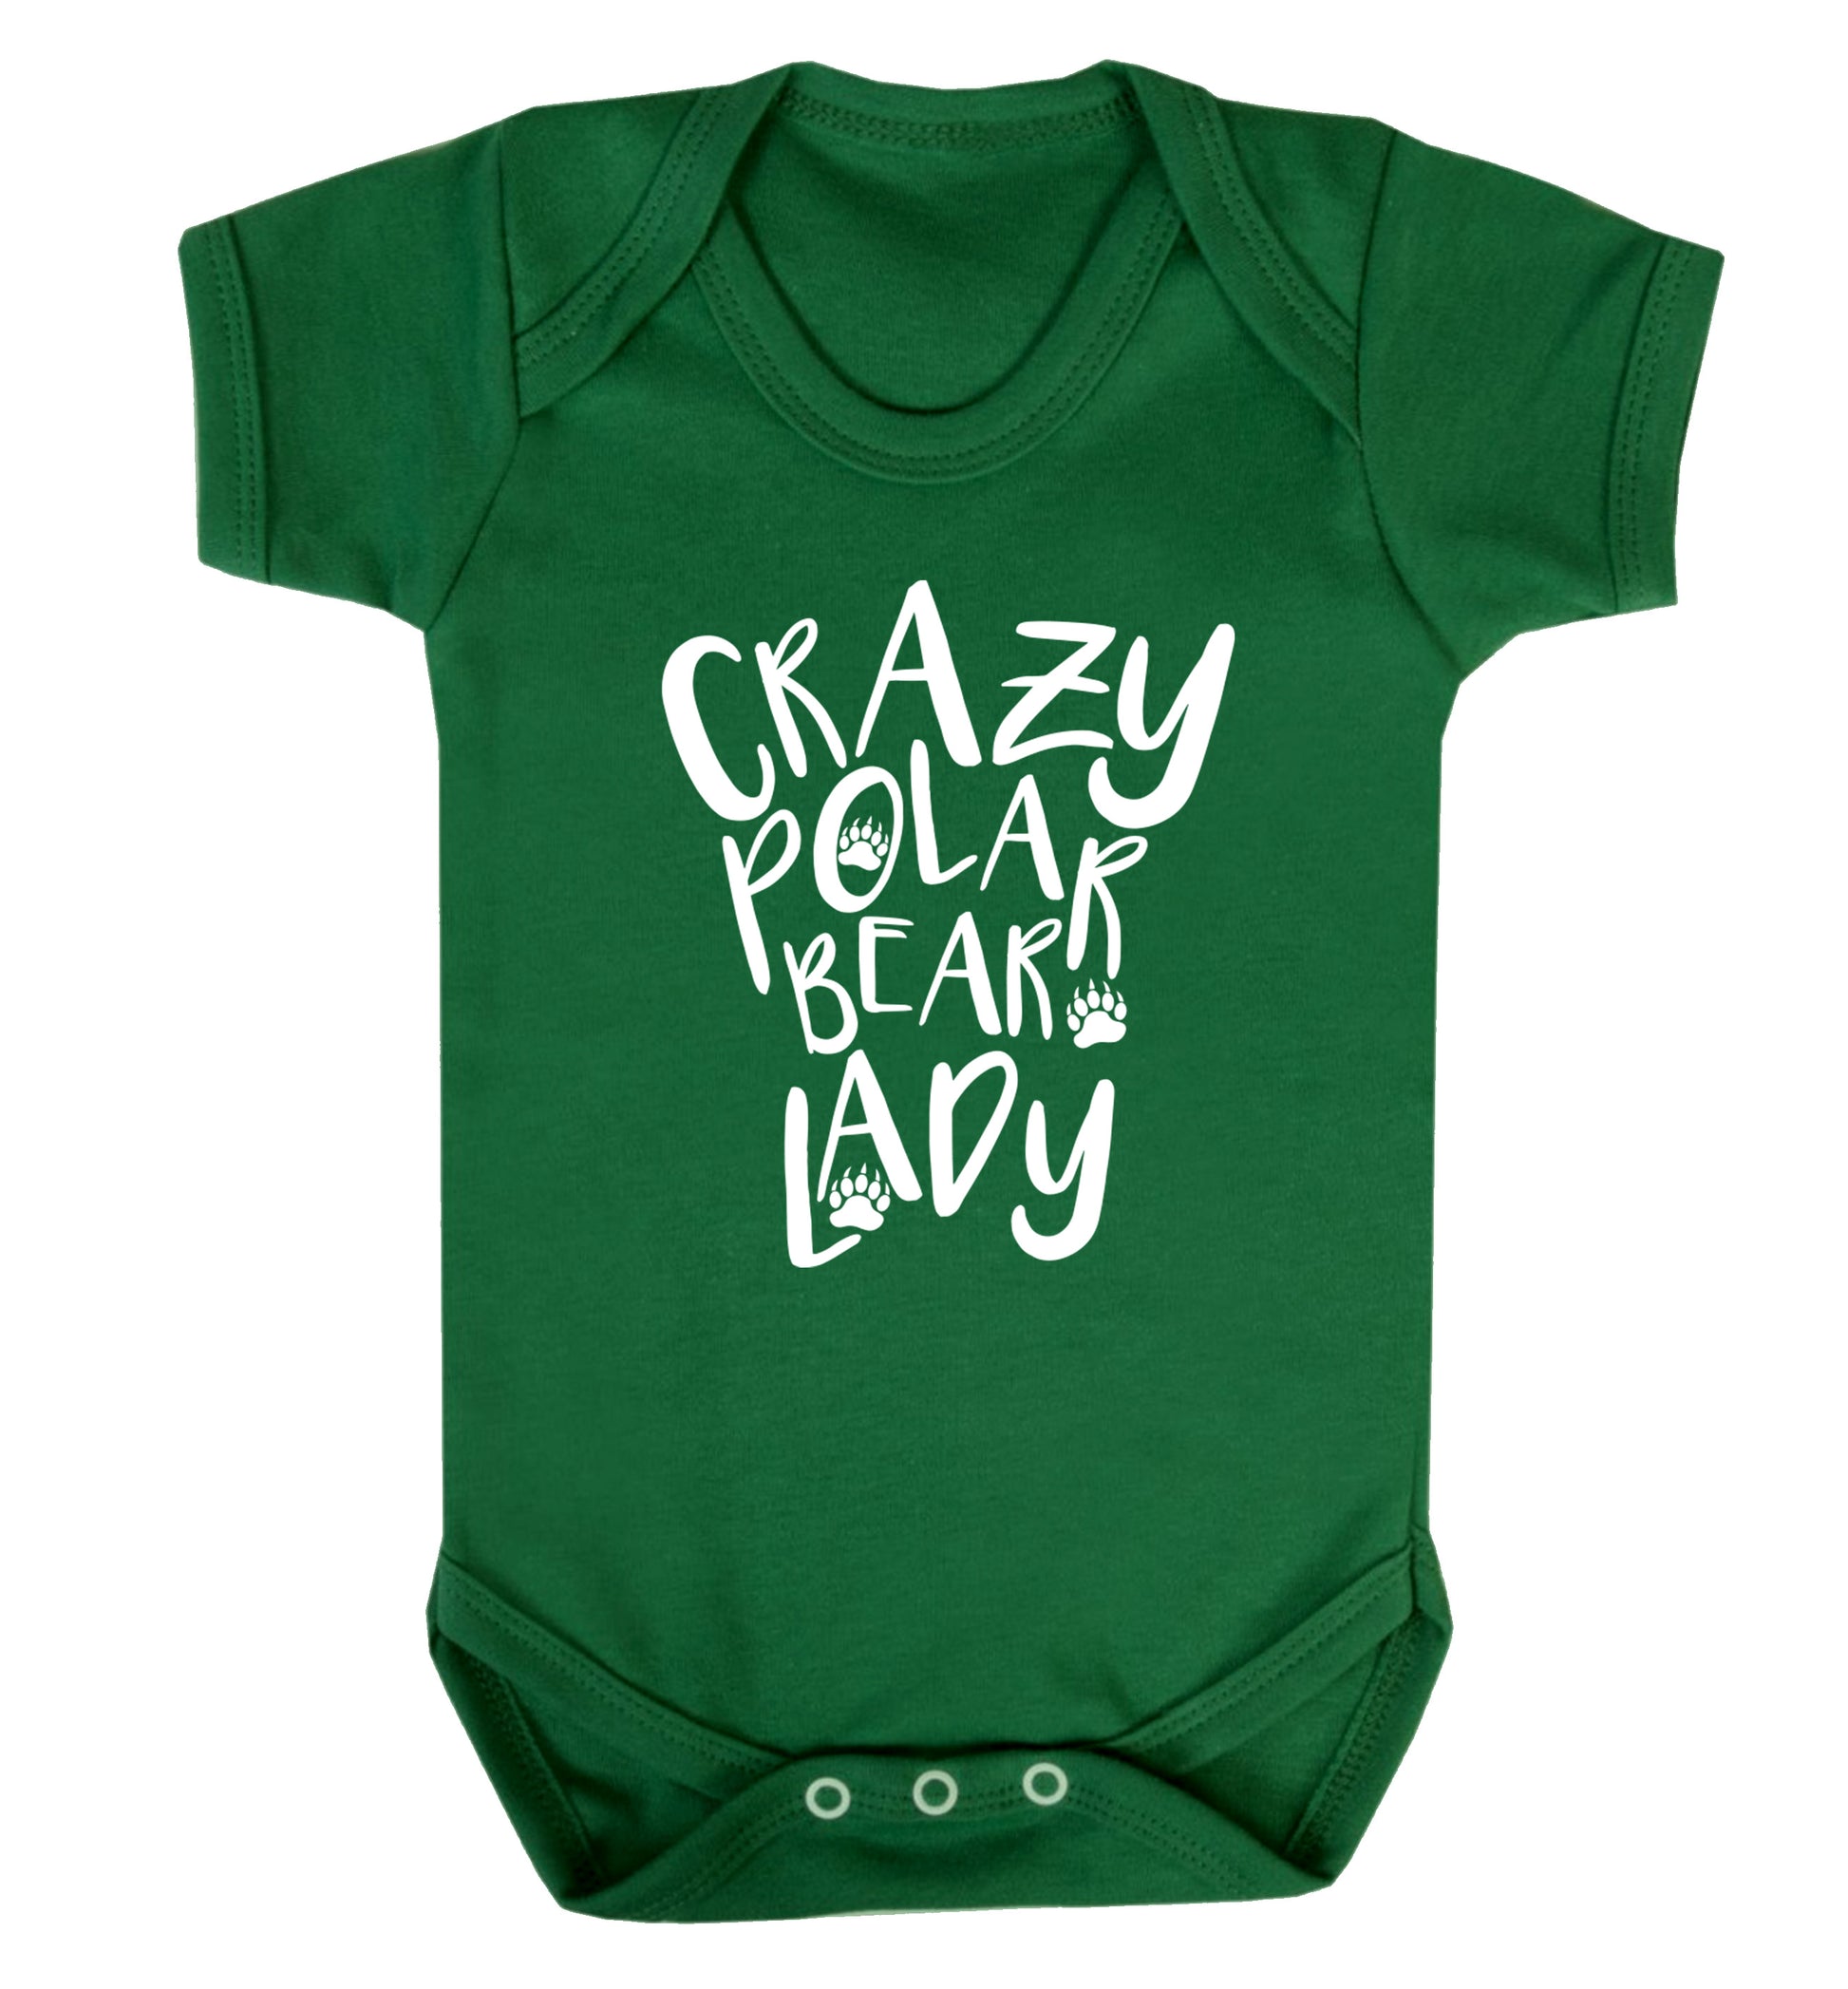 Crazy polar bear lady Baby Vest green 18-24 months